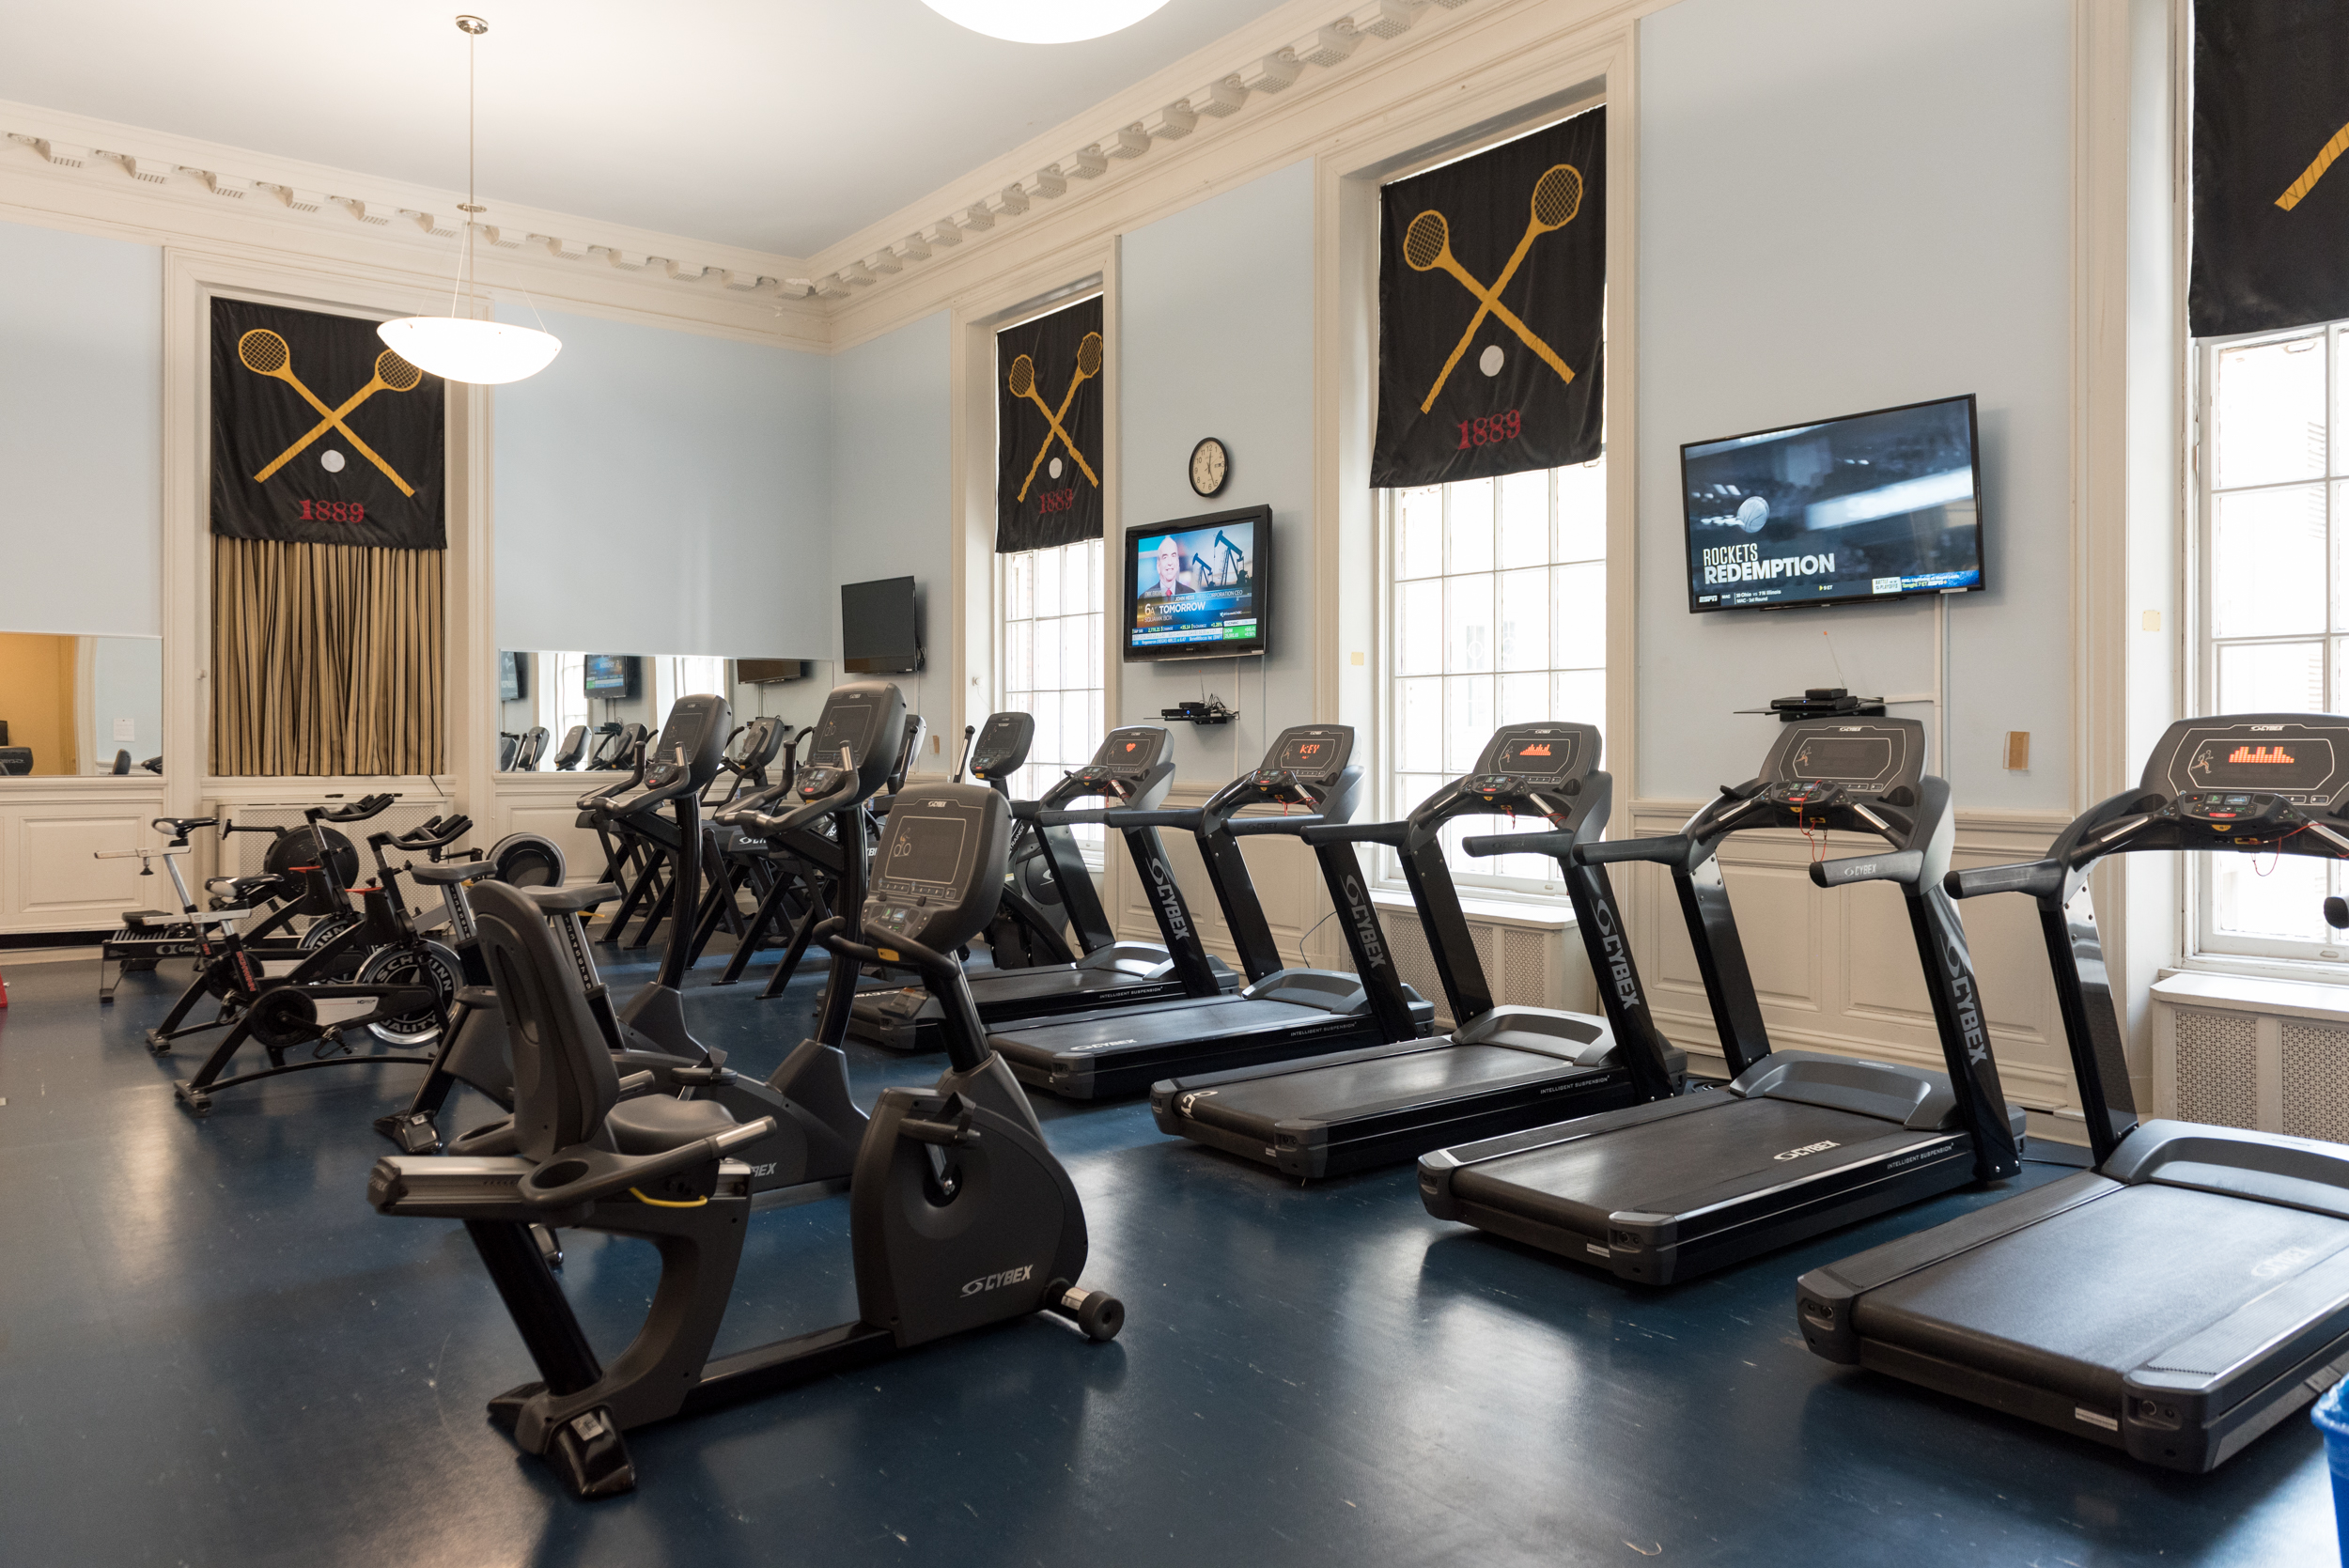 Fitness Center – The Racquet Club of Philadelphia